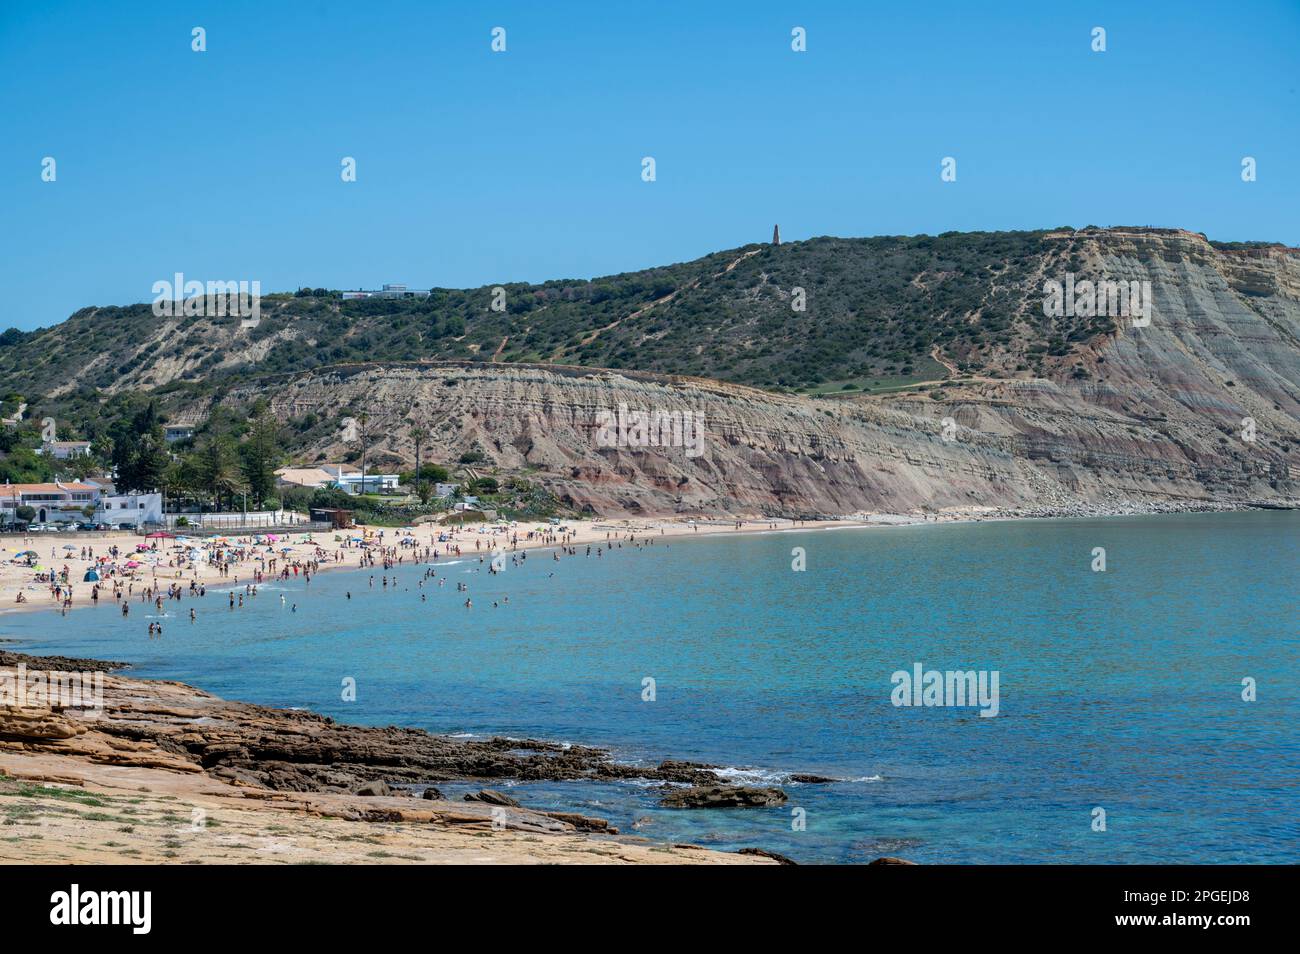 A view of the beach and coast around Praia De Luz, the Algarve, Portugal Stock Photo